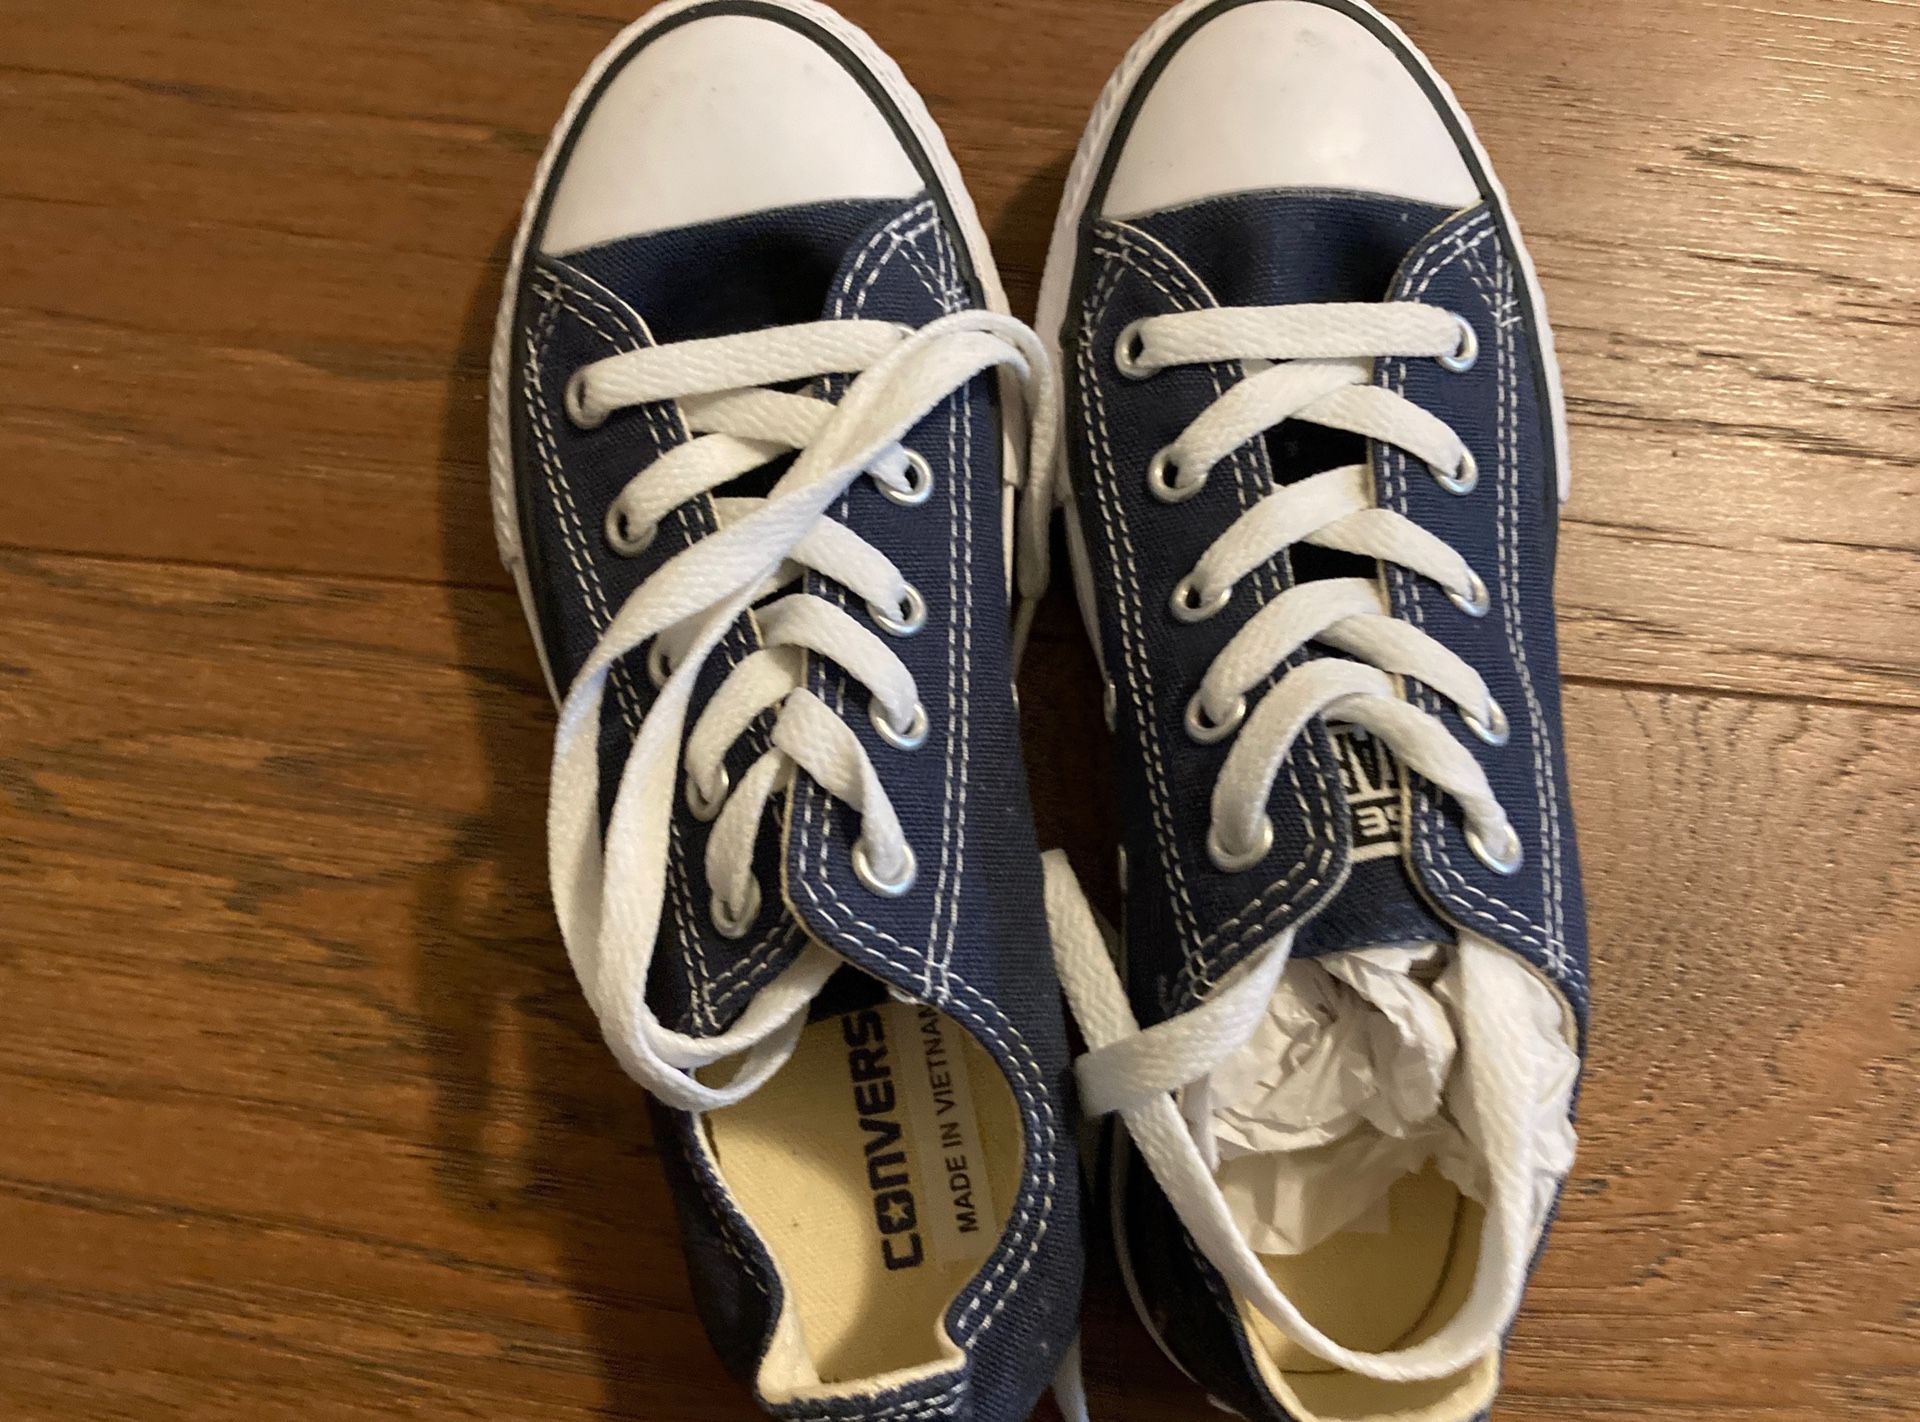 Converse All-Star shoe